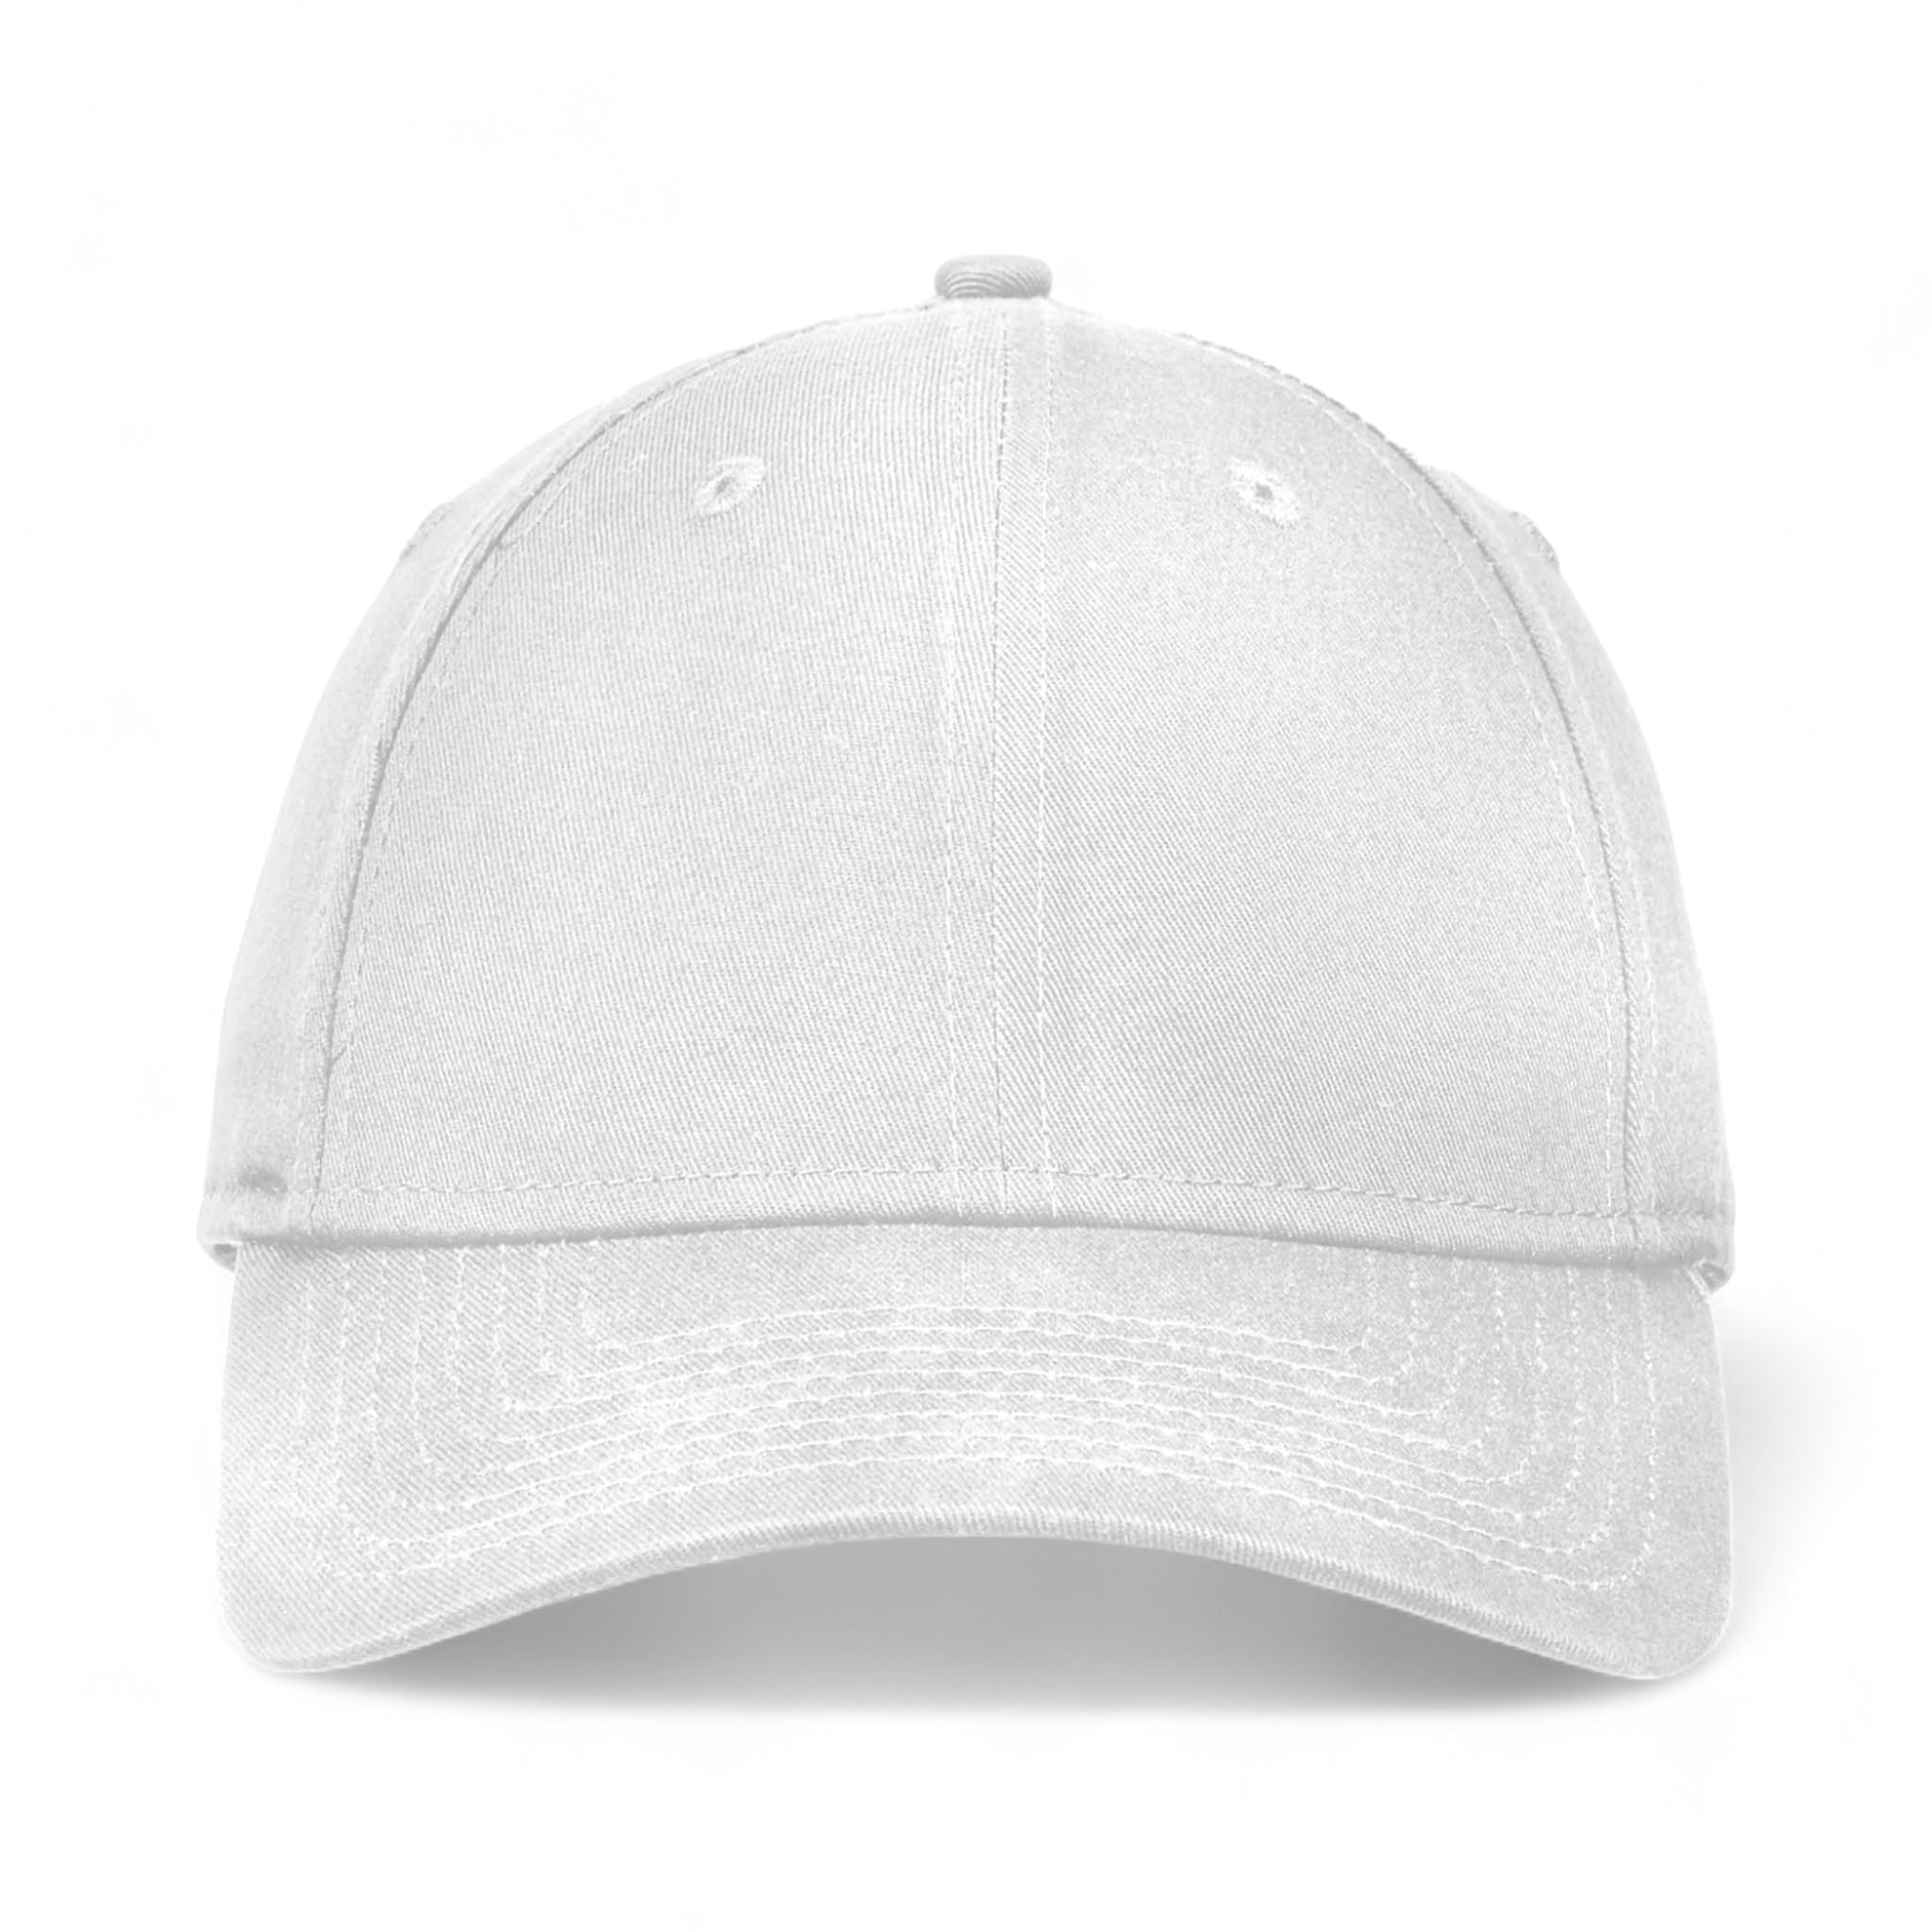 Front view of New Era NE200 custom hat in white